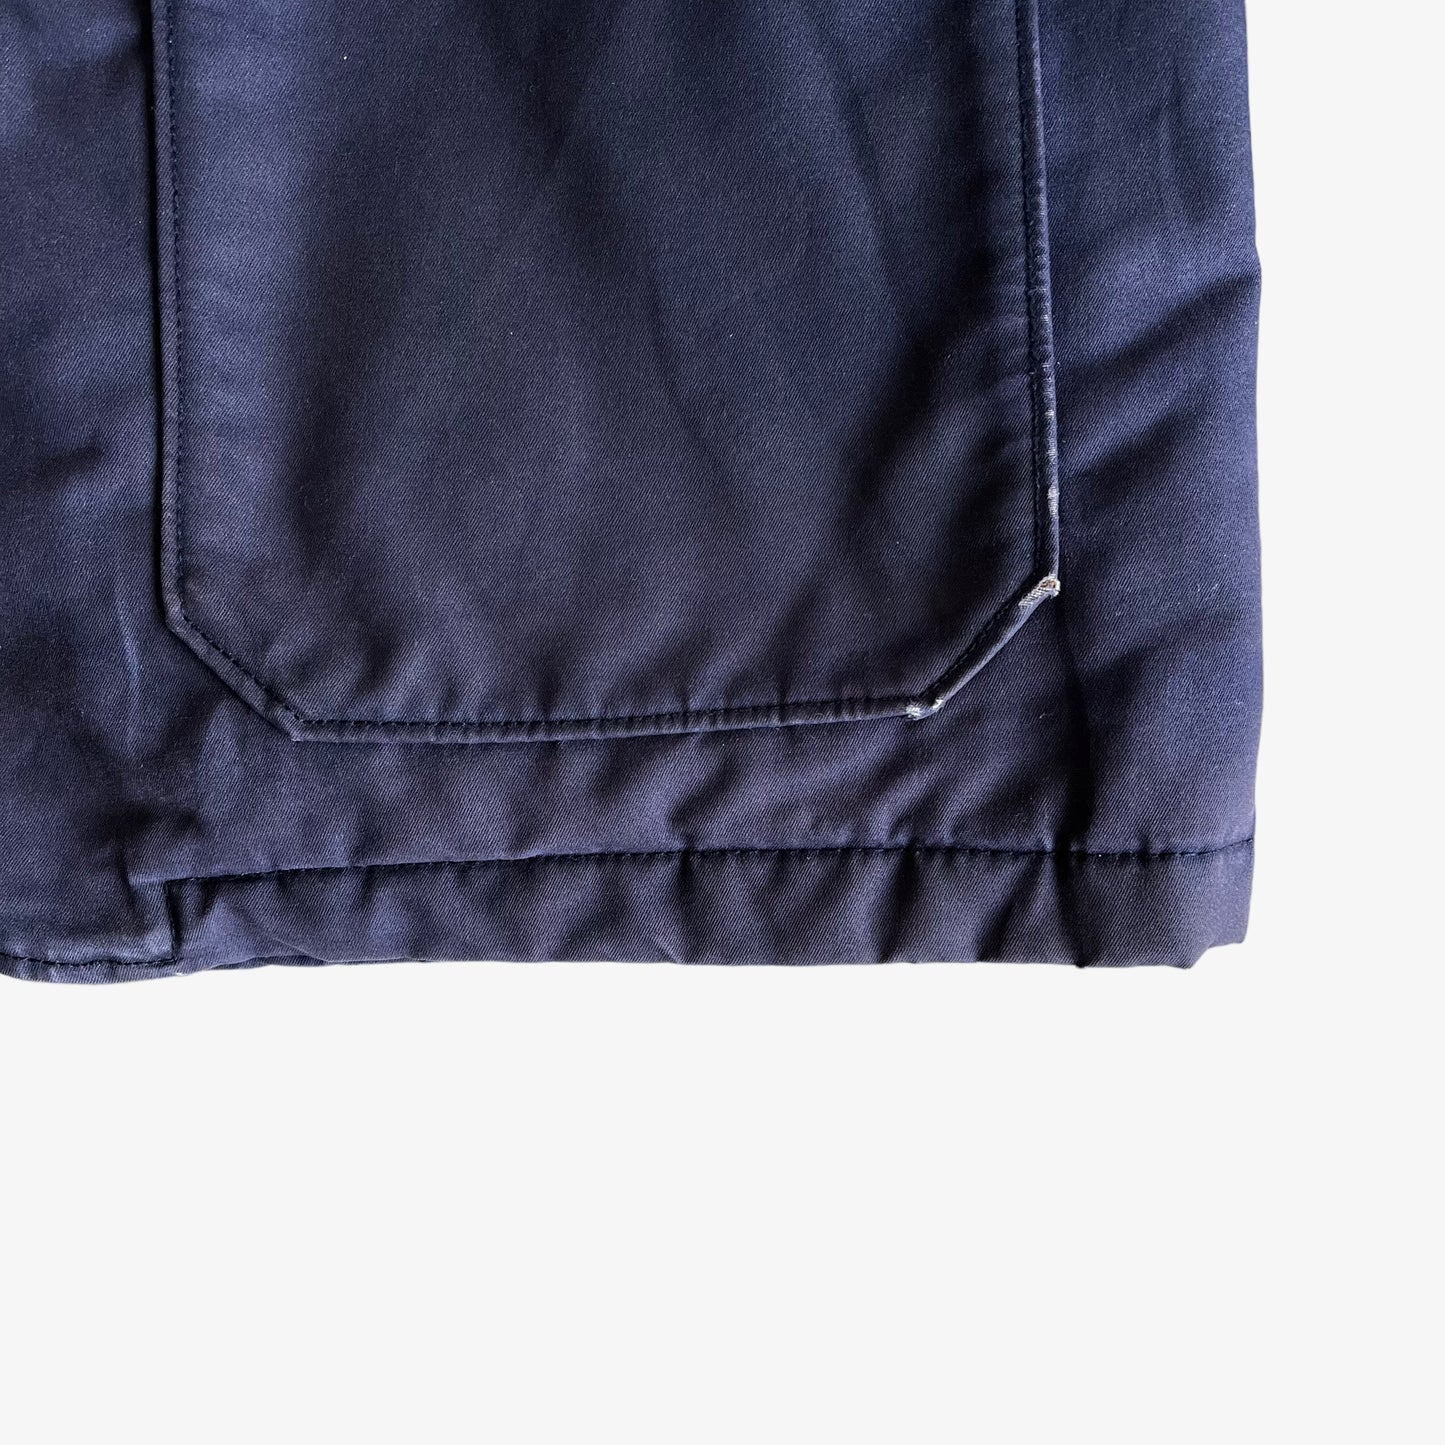 Vintage Y2K Levis Chore Workwear Jacket With Corduroy Collar Pocket - Casspios Dream